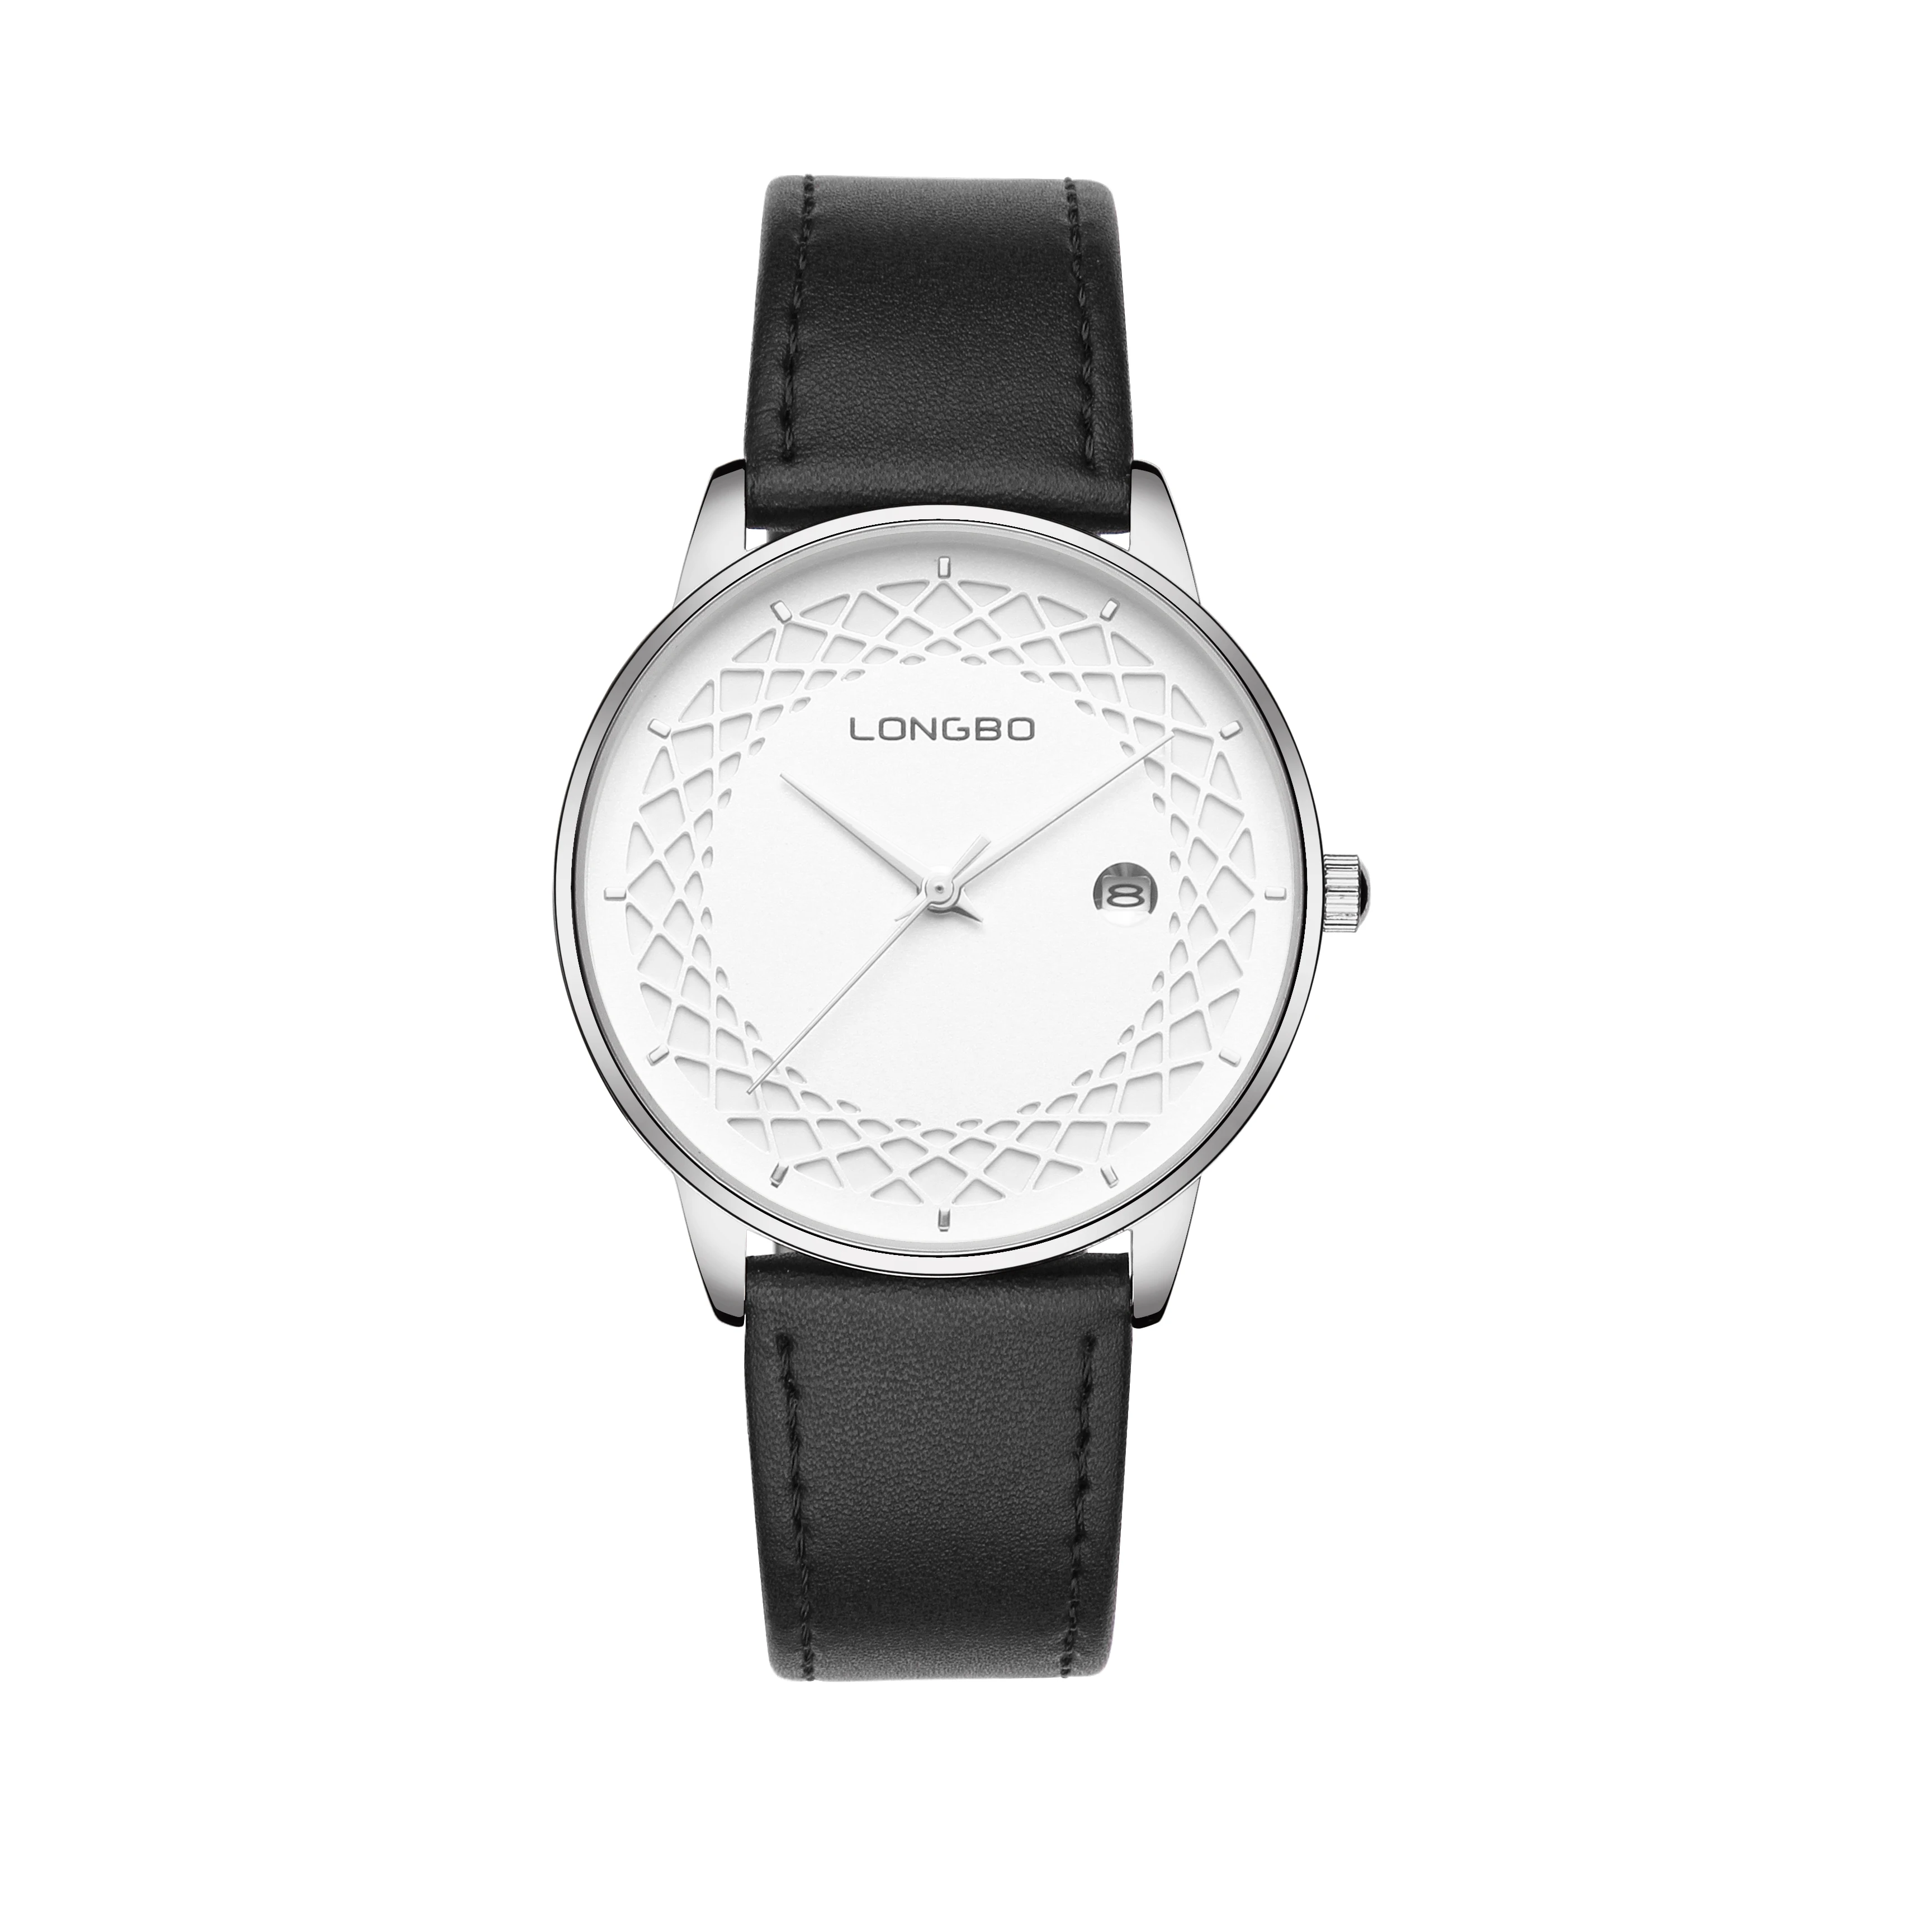 

LONGBO Top Luxury Brand Men Sports Military Watches Mens Quartz Analog Hour Date Clock Fashion Casual Wrist watch 7355